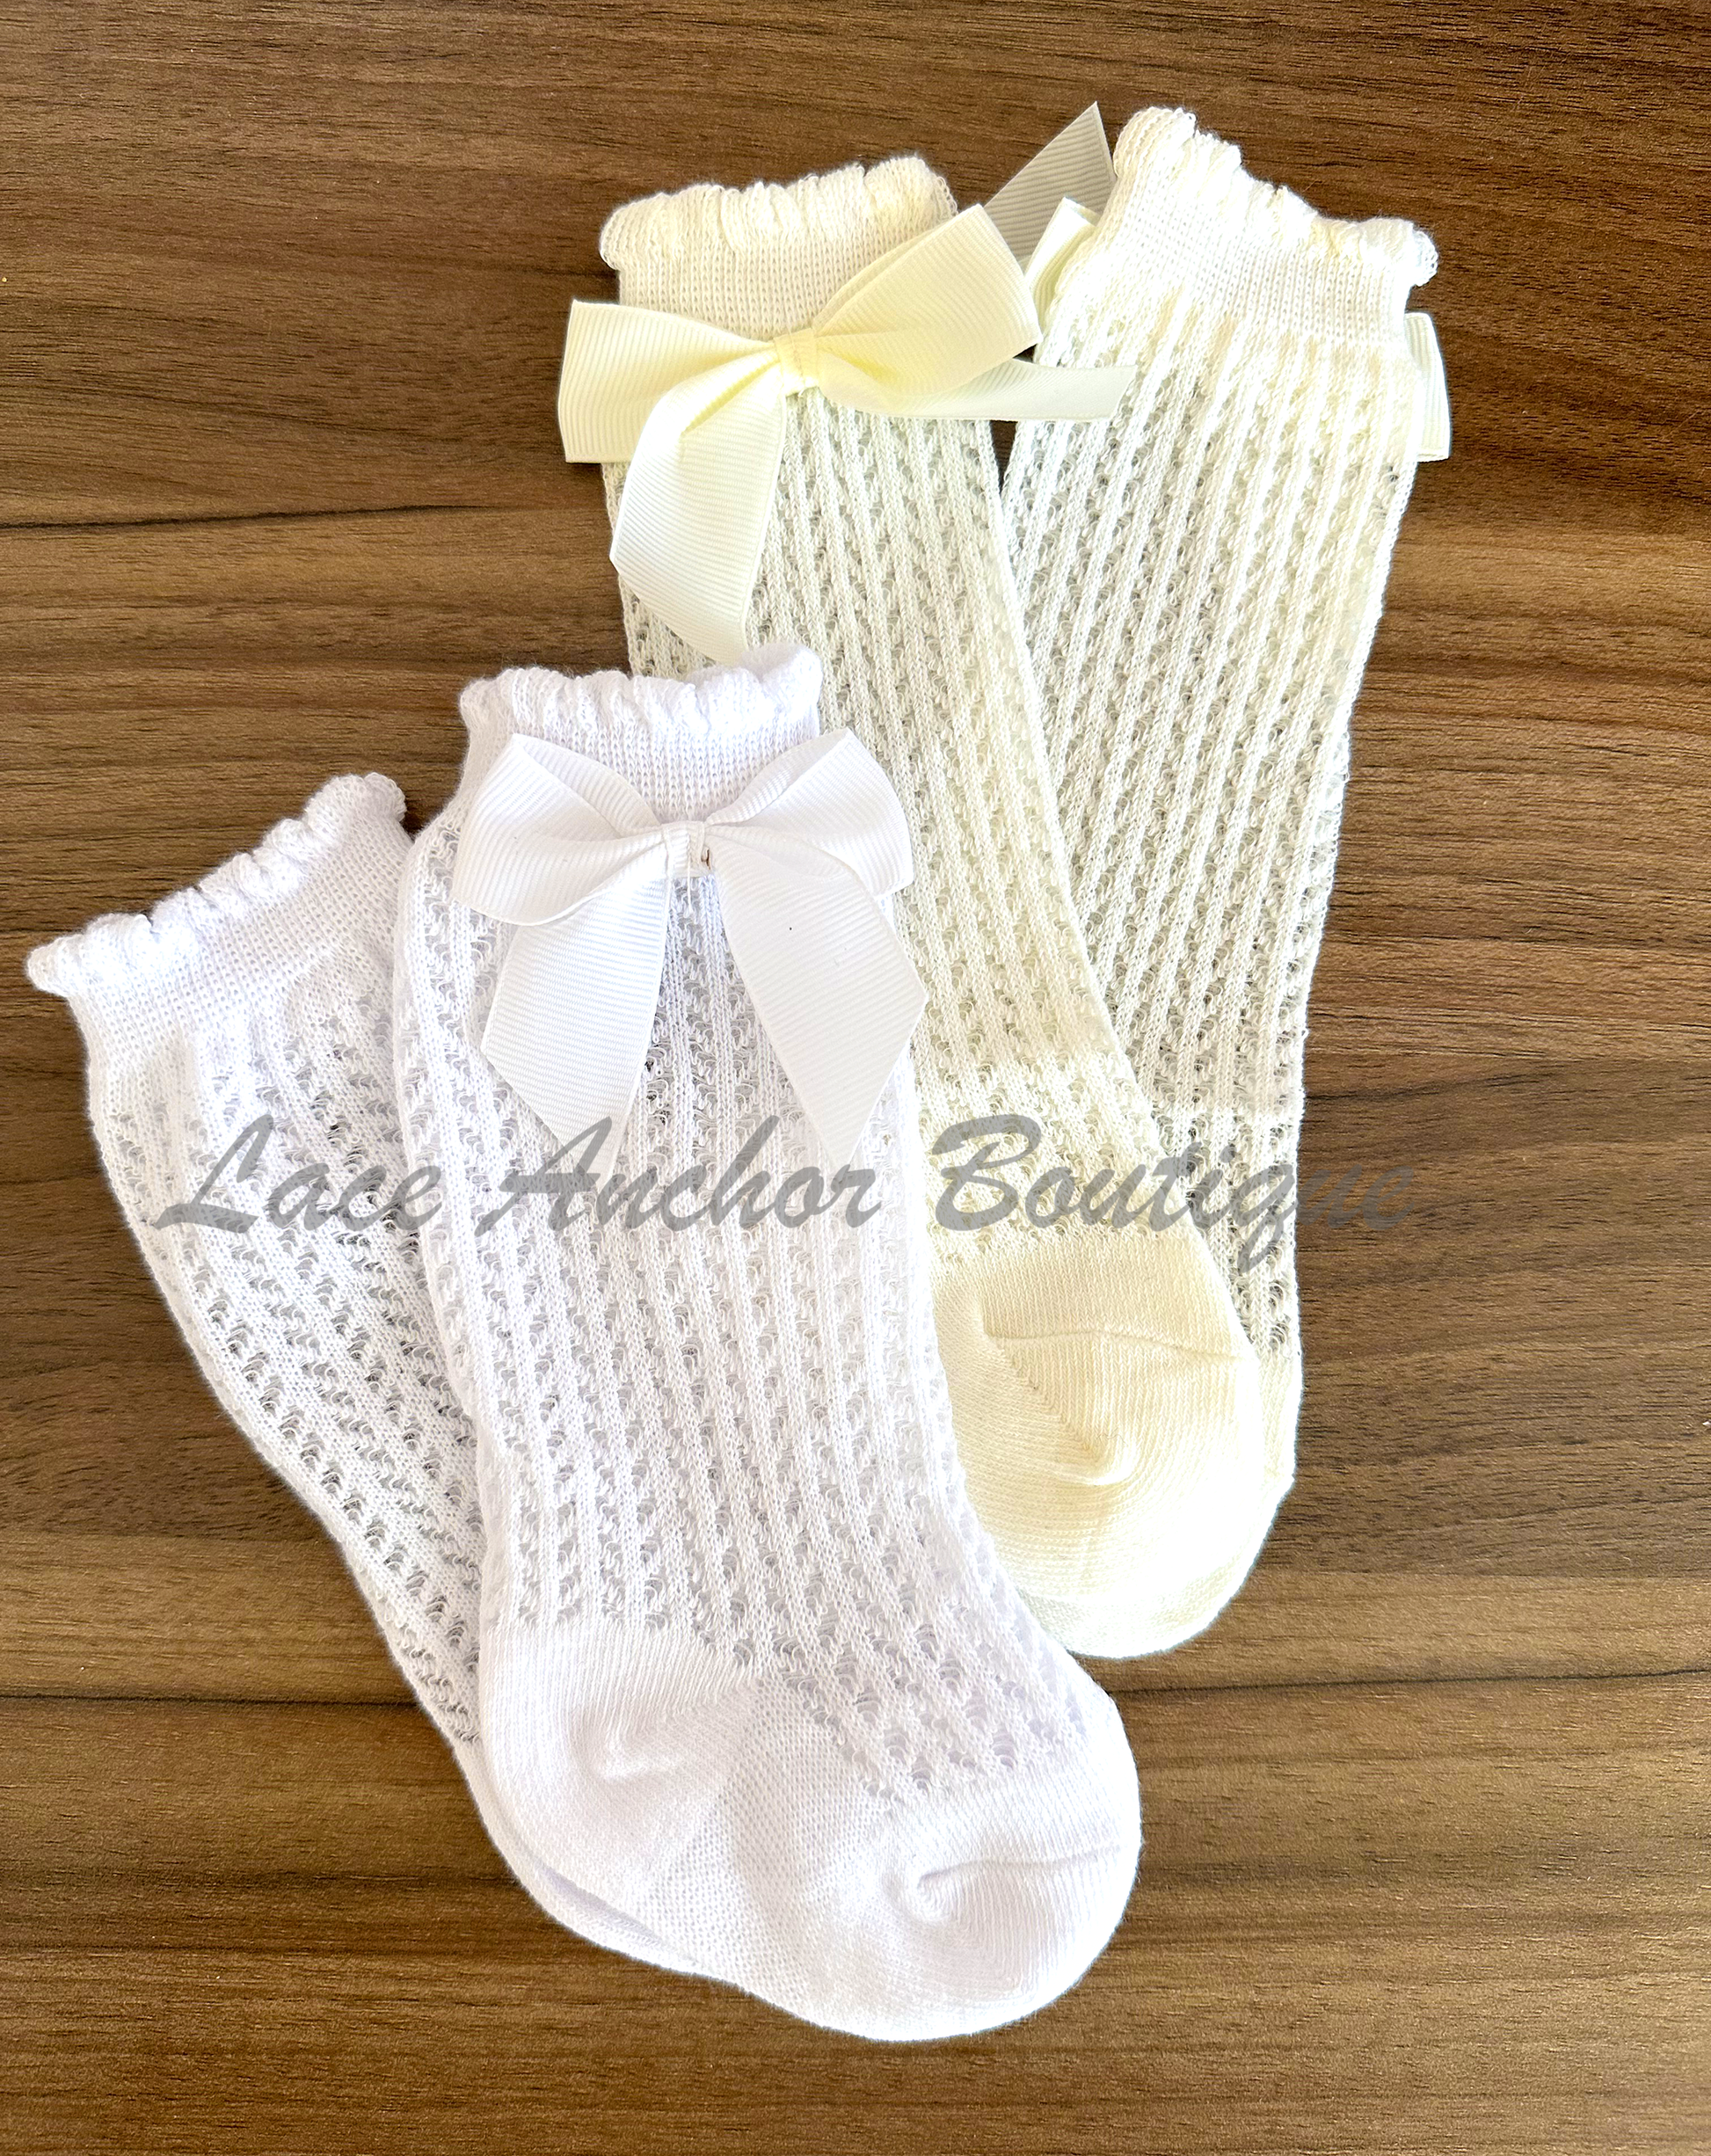 baby toddler girls socks. Eyelet knit crochet child's knee high sock with bow.